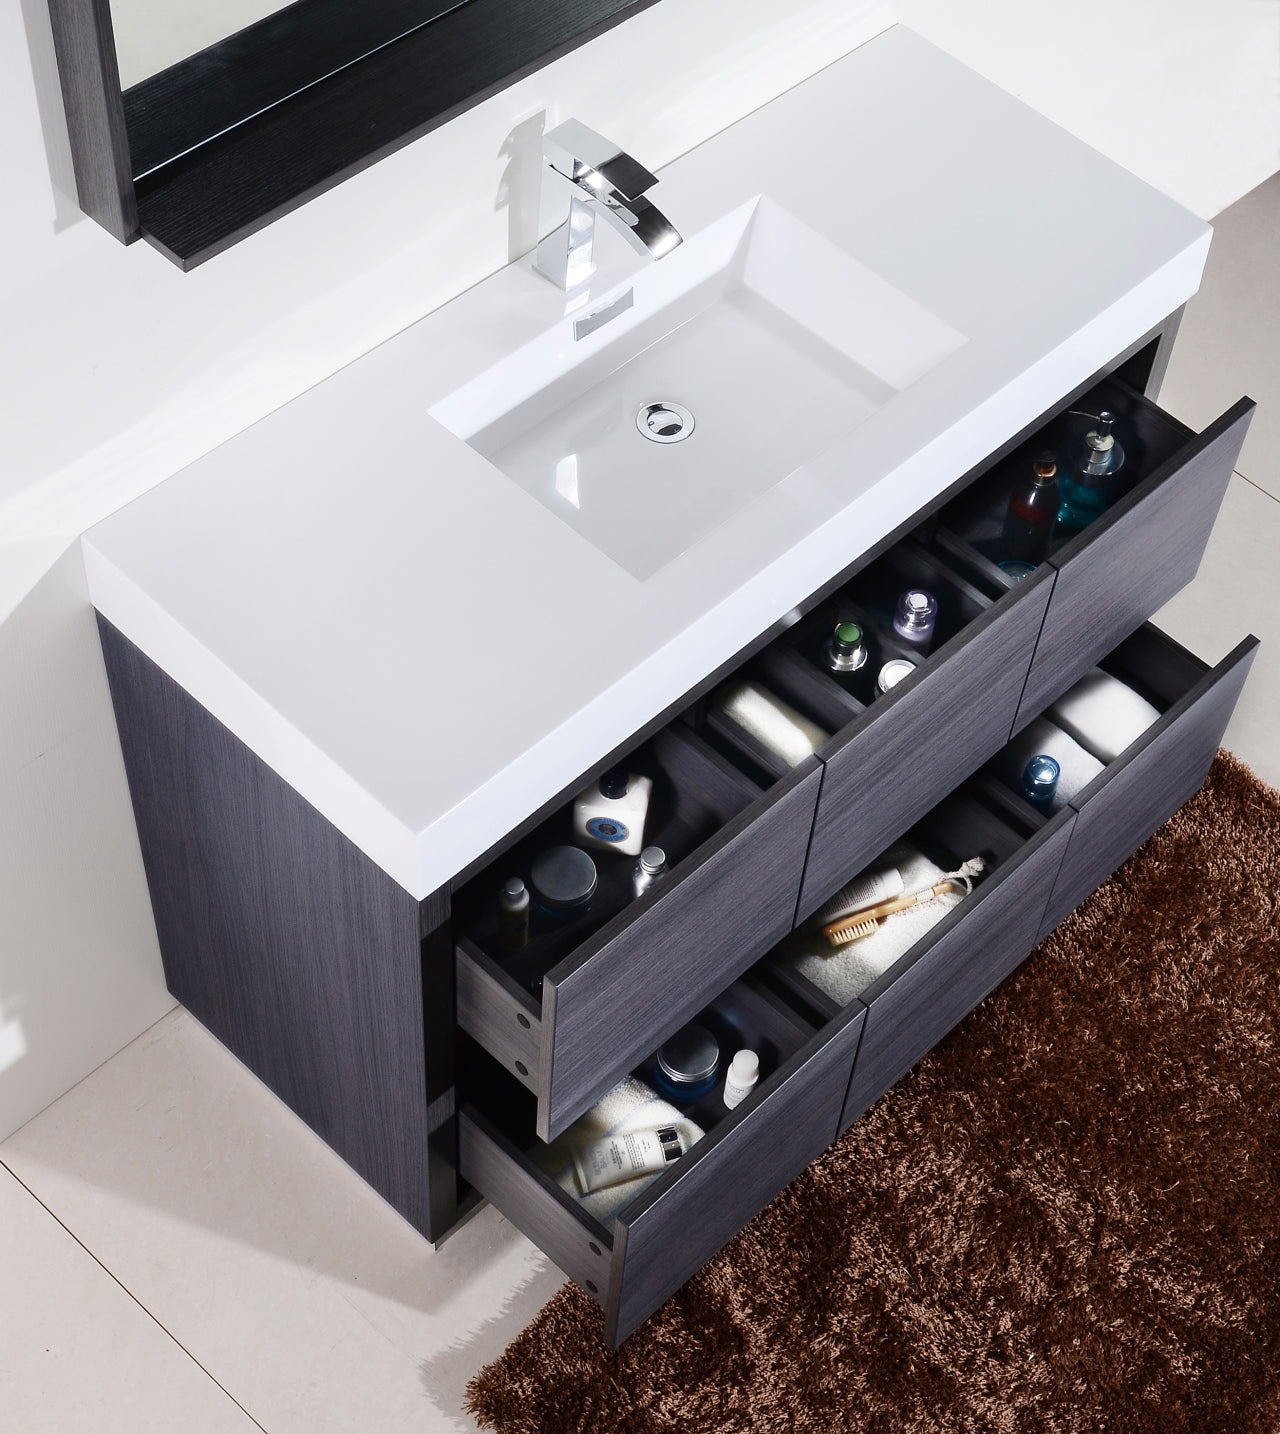 Bliss 48″ Inch Gray Oak Free Standing Modern Bathroom Vanity